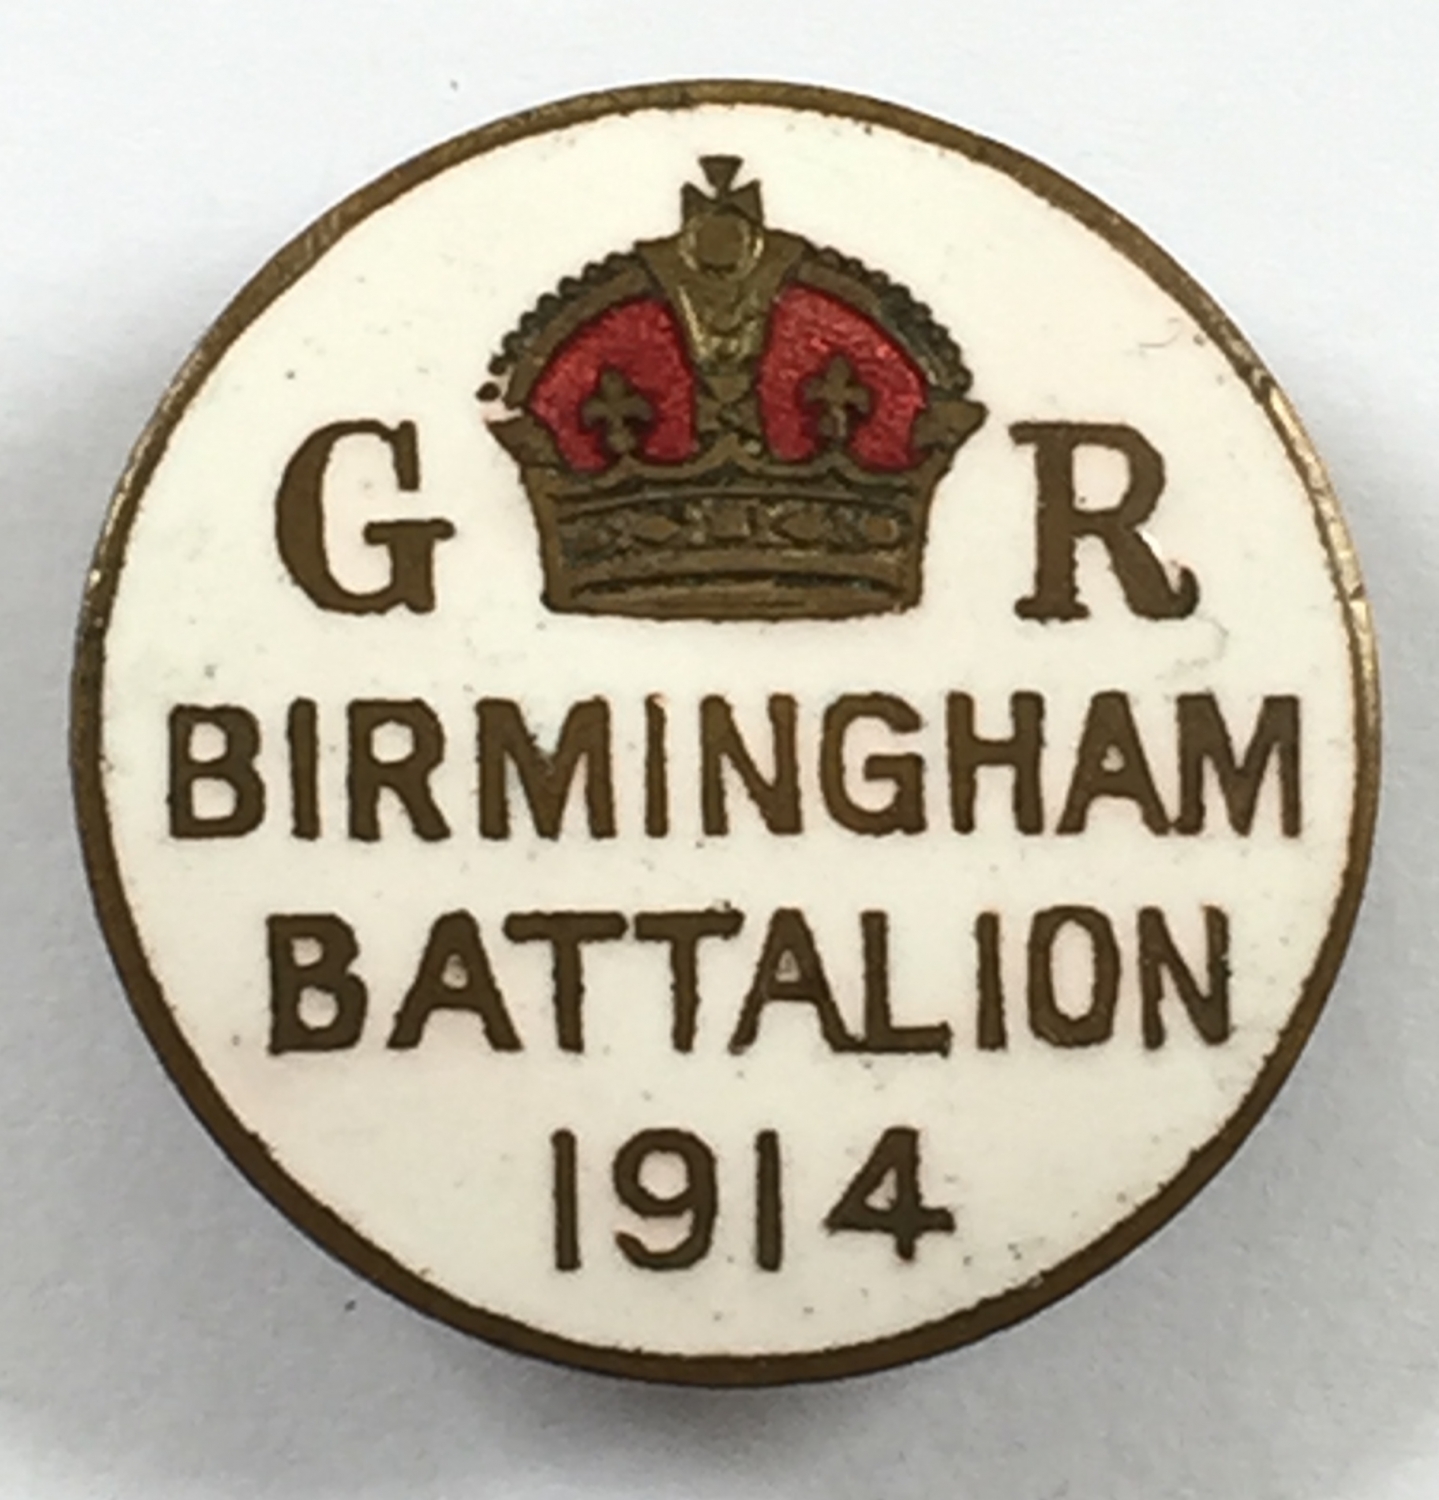 WW1 Birmingham Battalion 1914 lapel badge